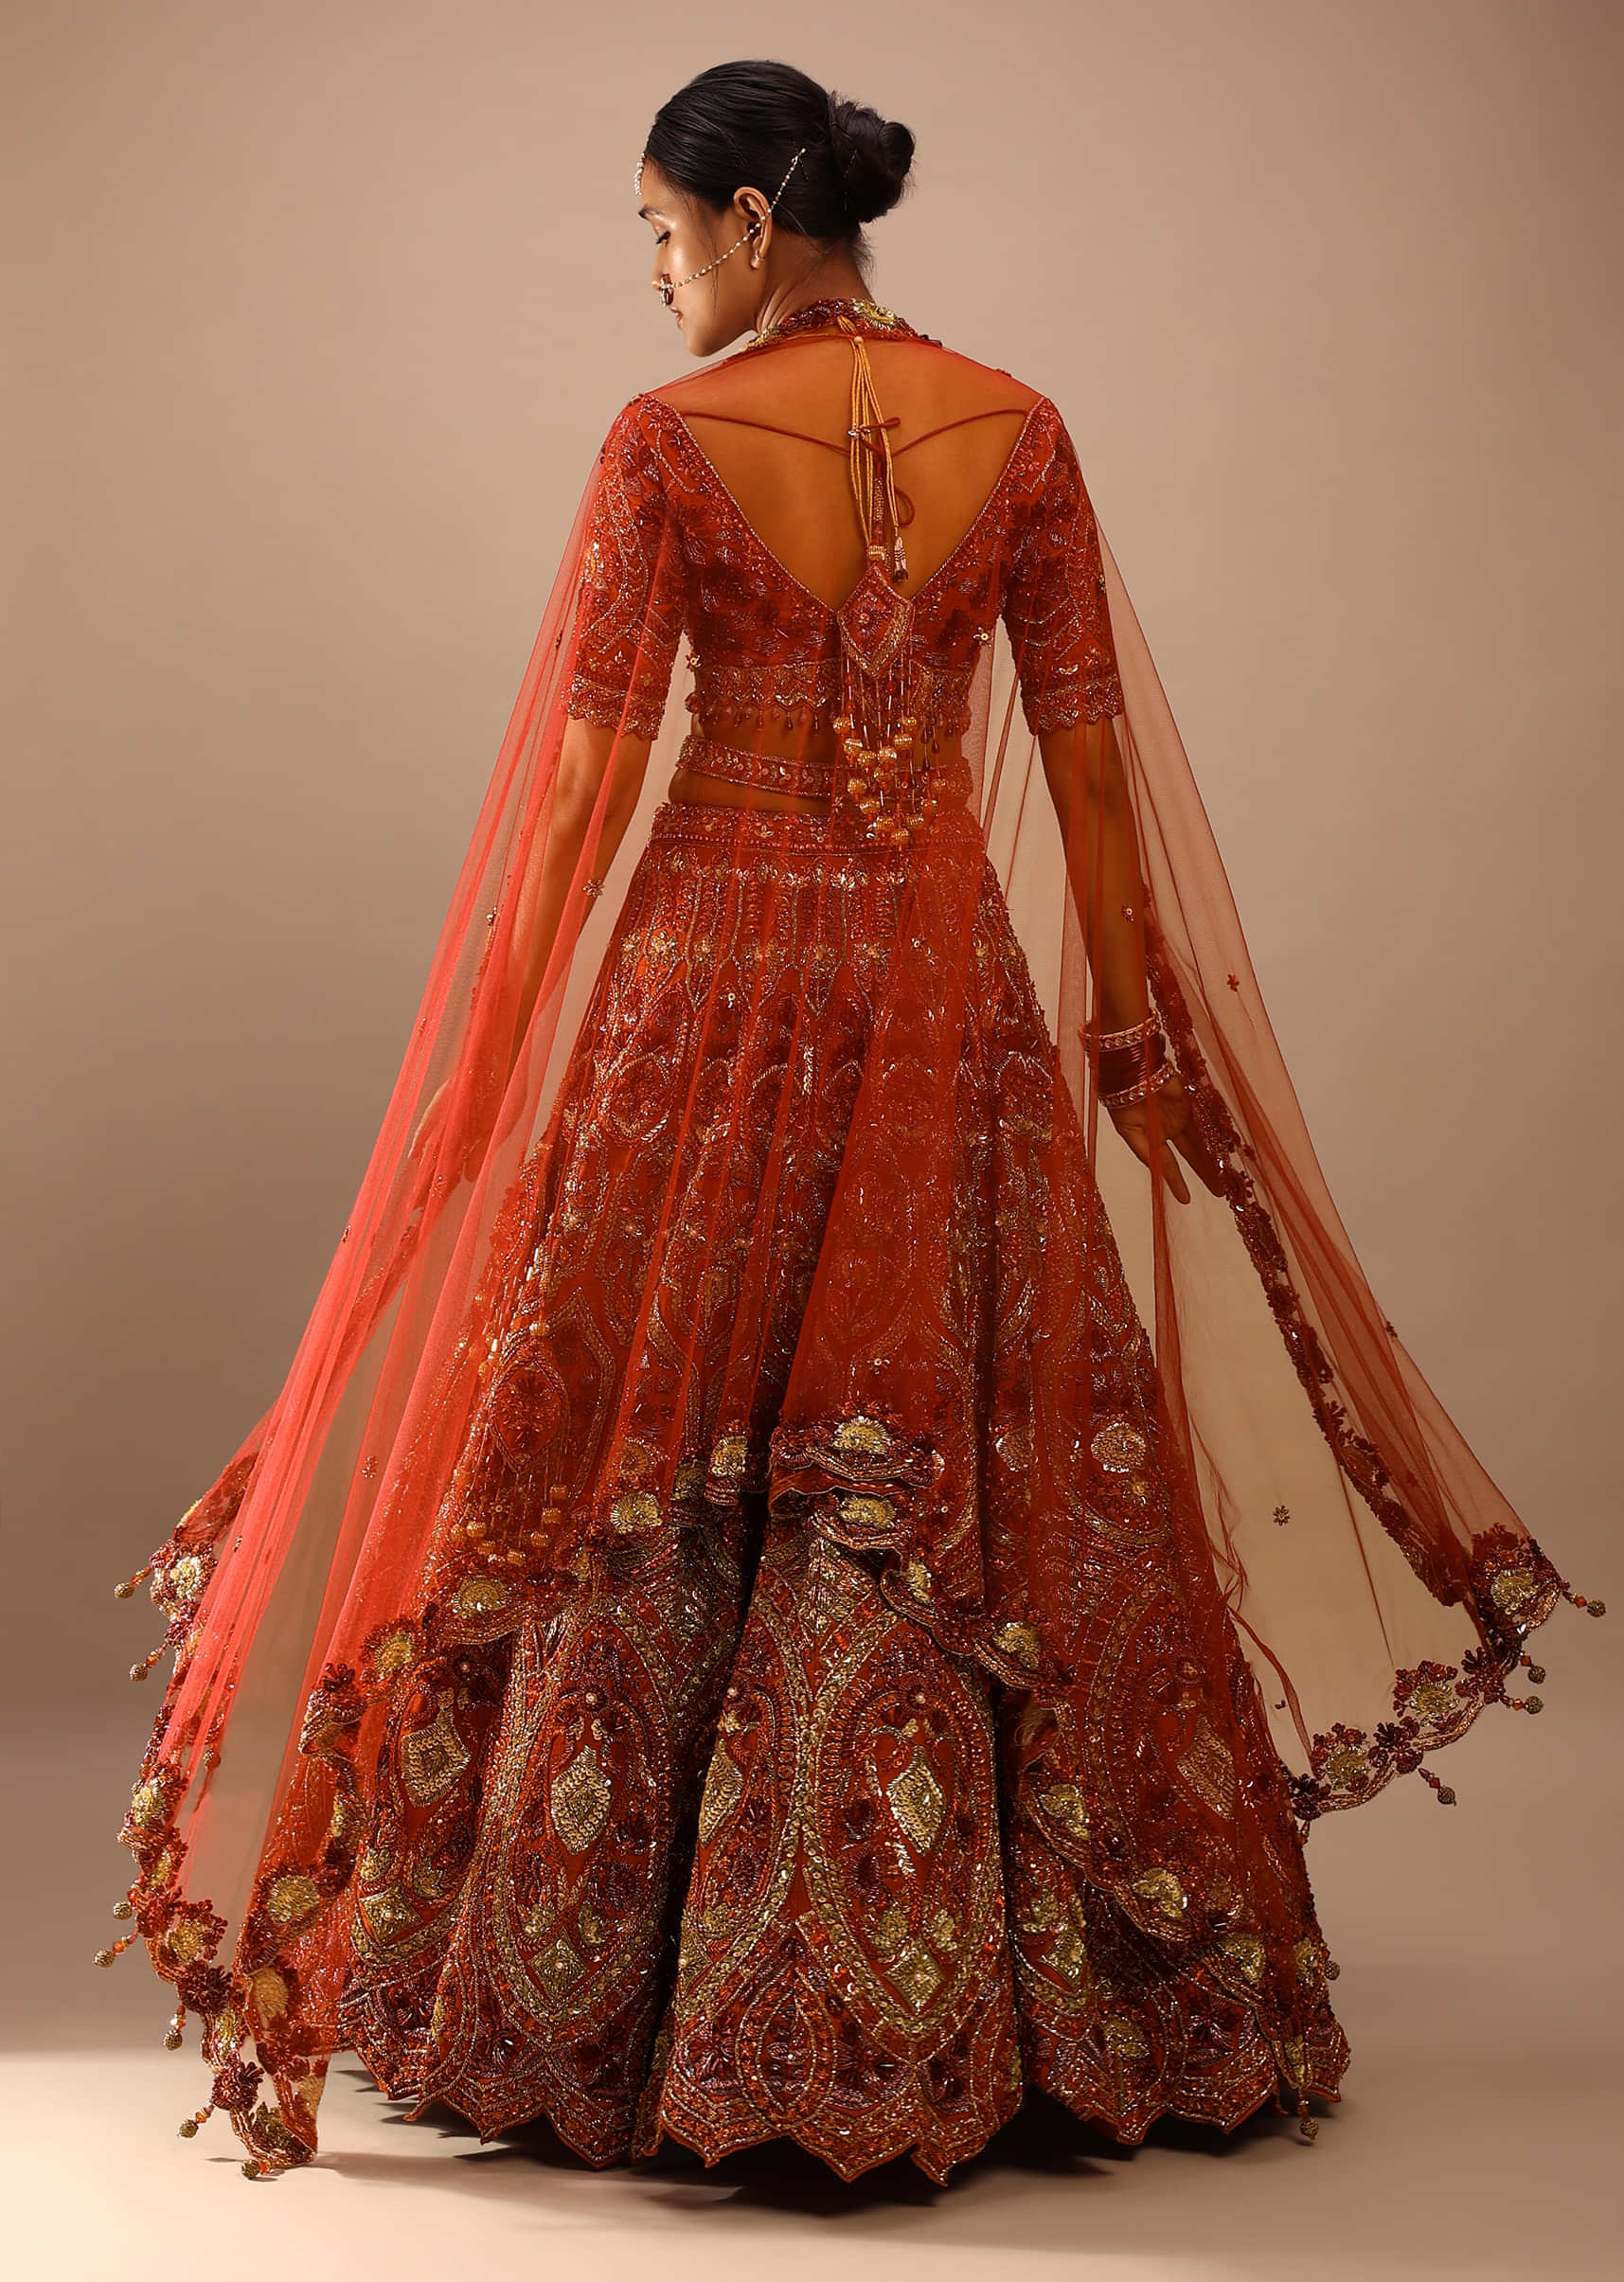 Orange Lehenga And Choli In Royal Heritage With Multi Color Cut Dana Embroidery, Matching Dupatta With Tassel Doris At The Corner